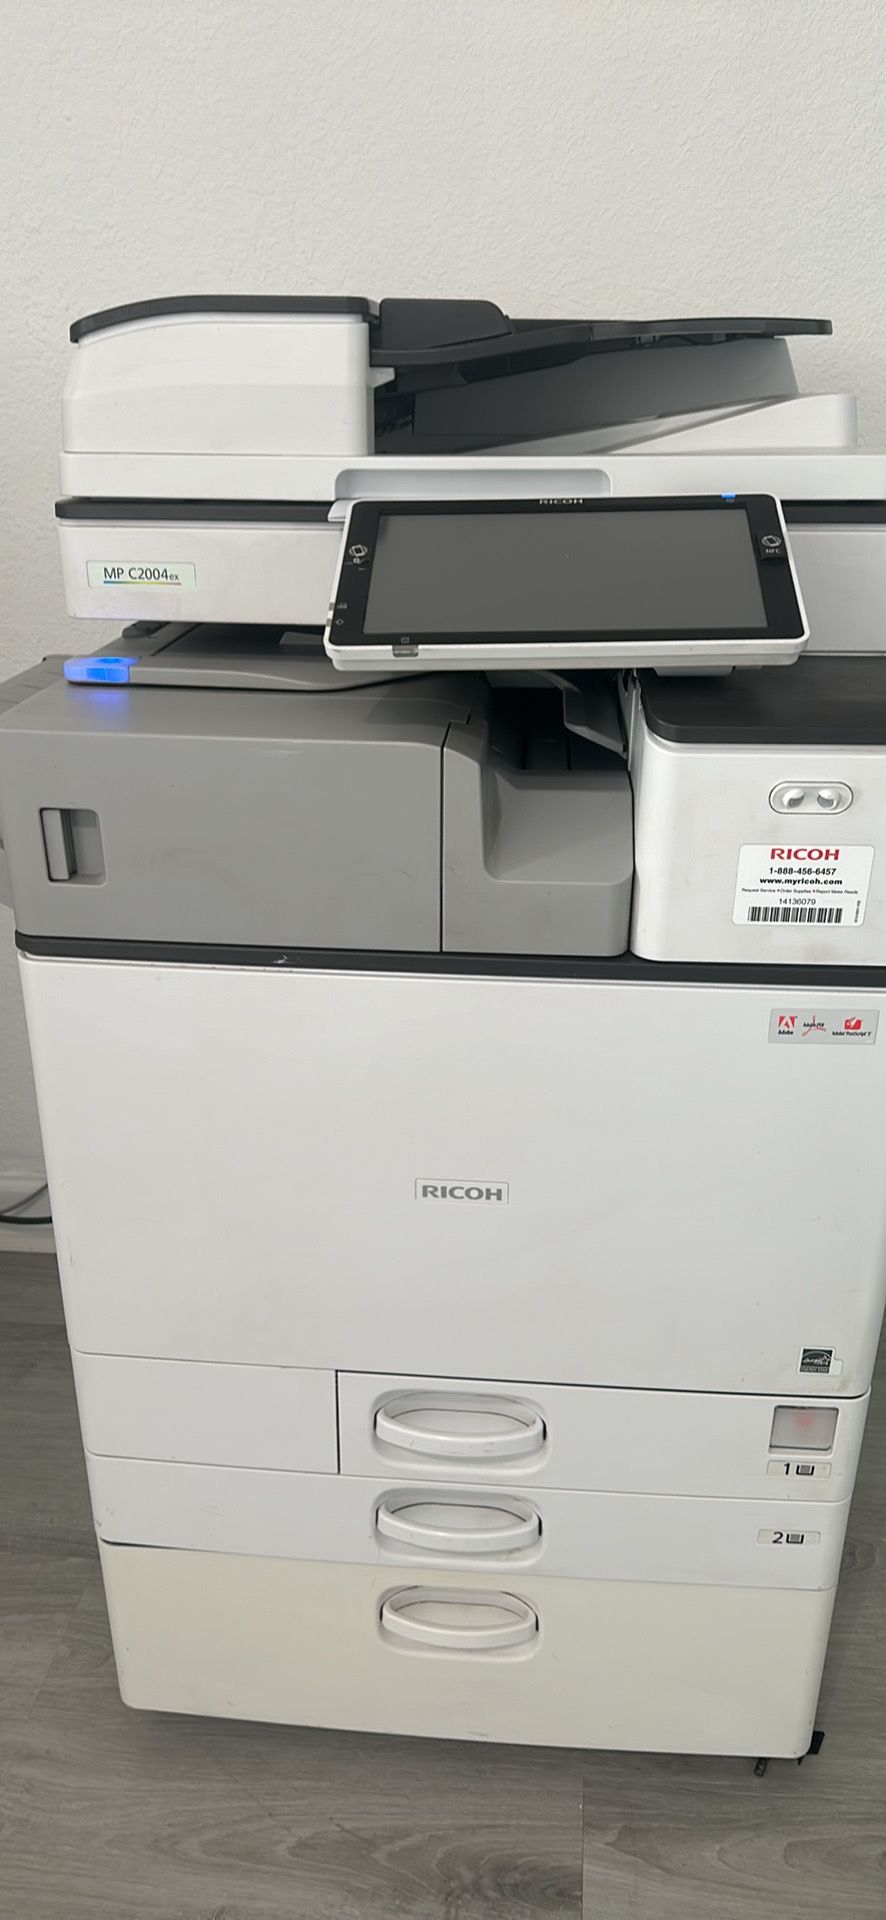 Printer Ricoh Mp C2004 Ex